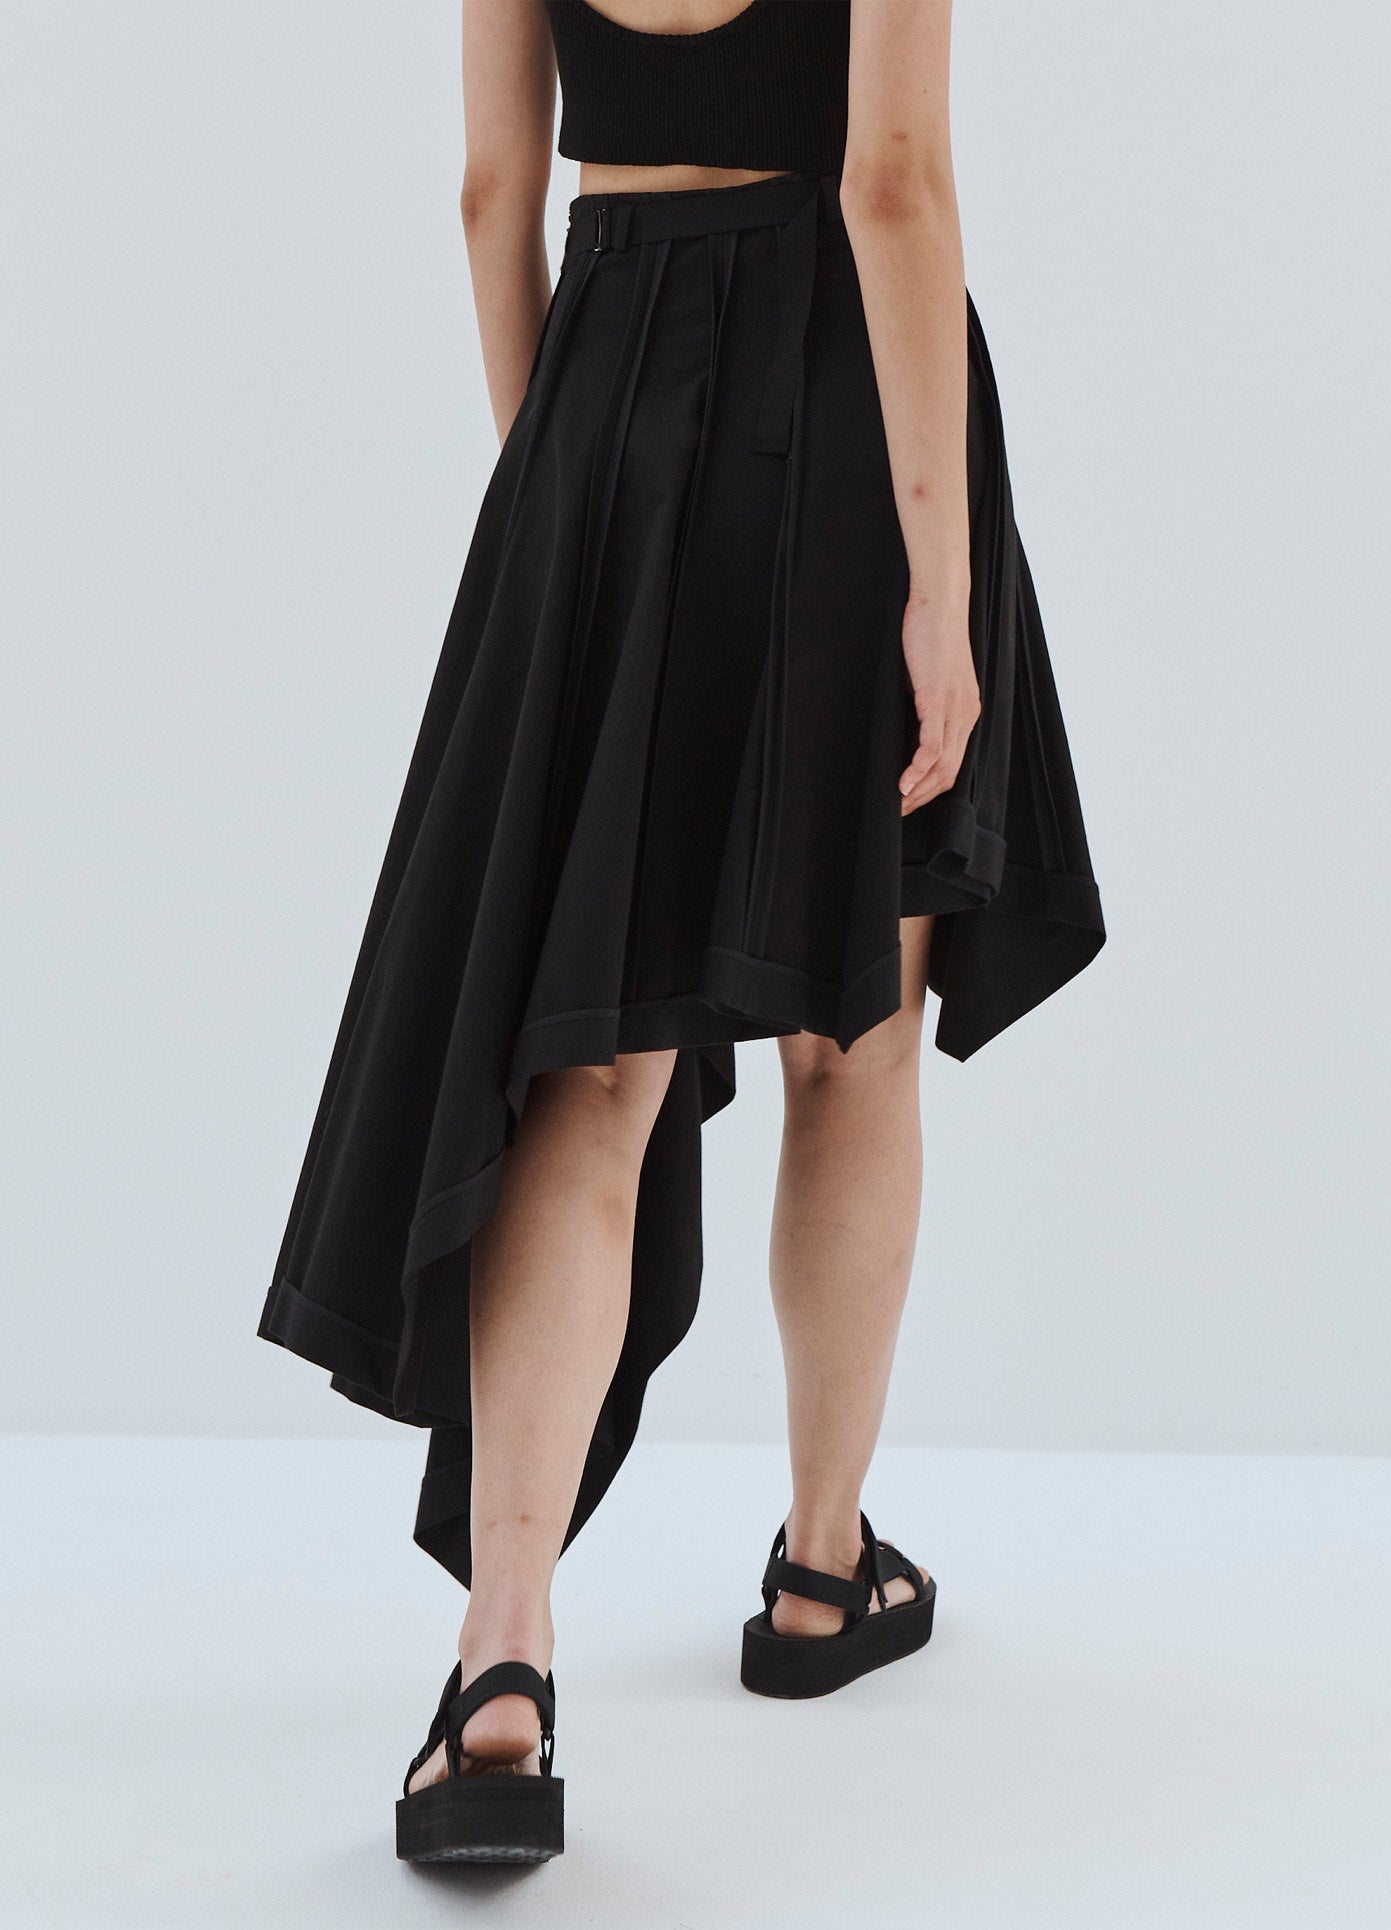 MONSE Laced Up Asymmetrical Hem Skirt in Black on Model Walking Back Detail View